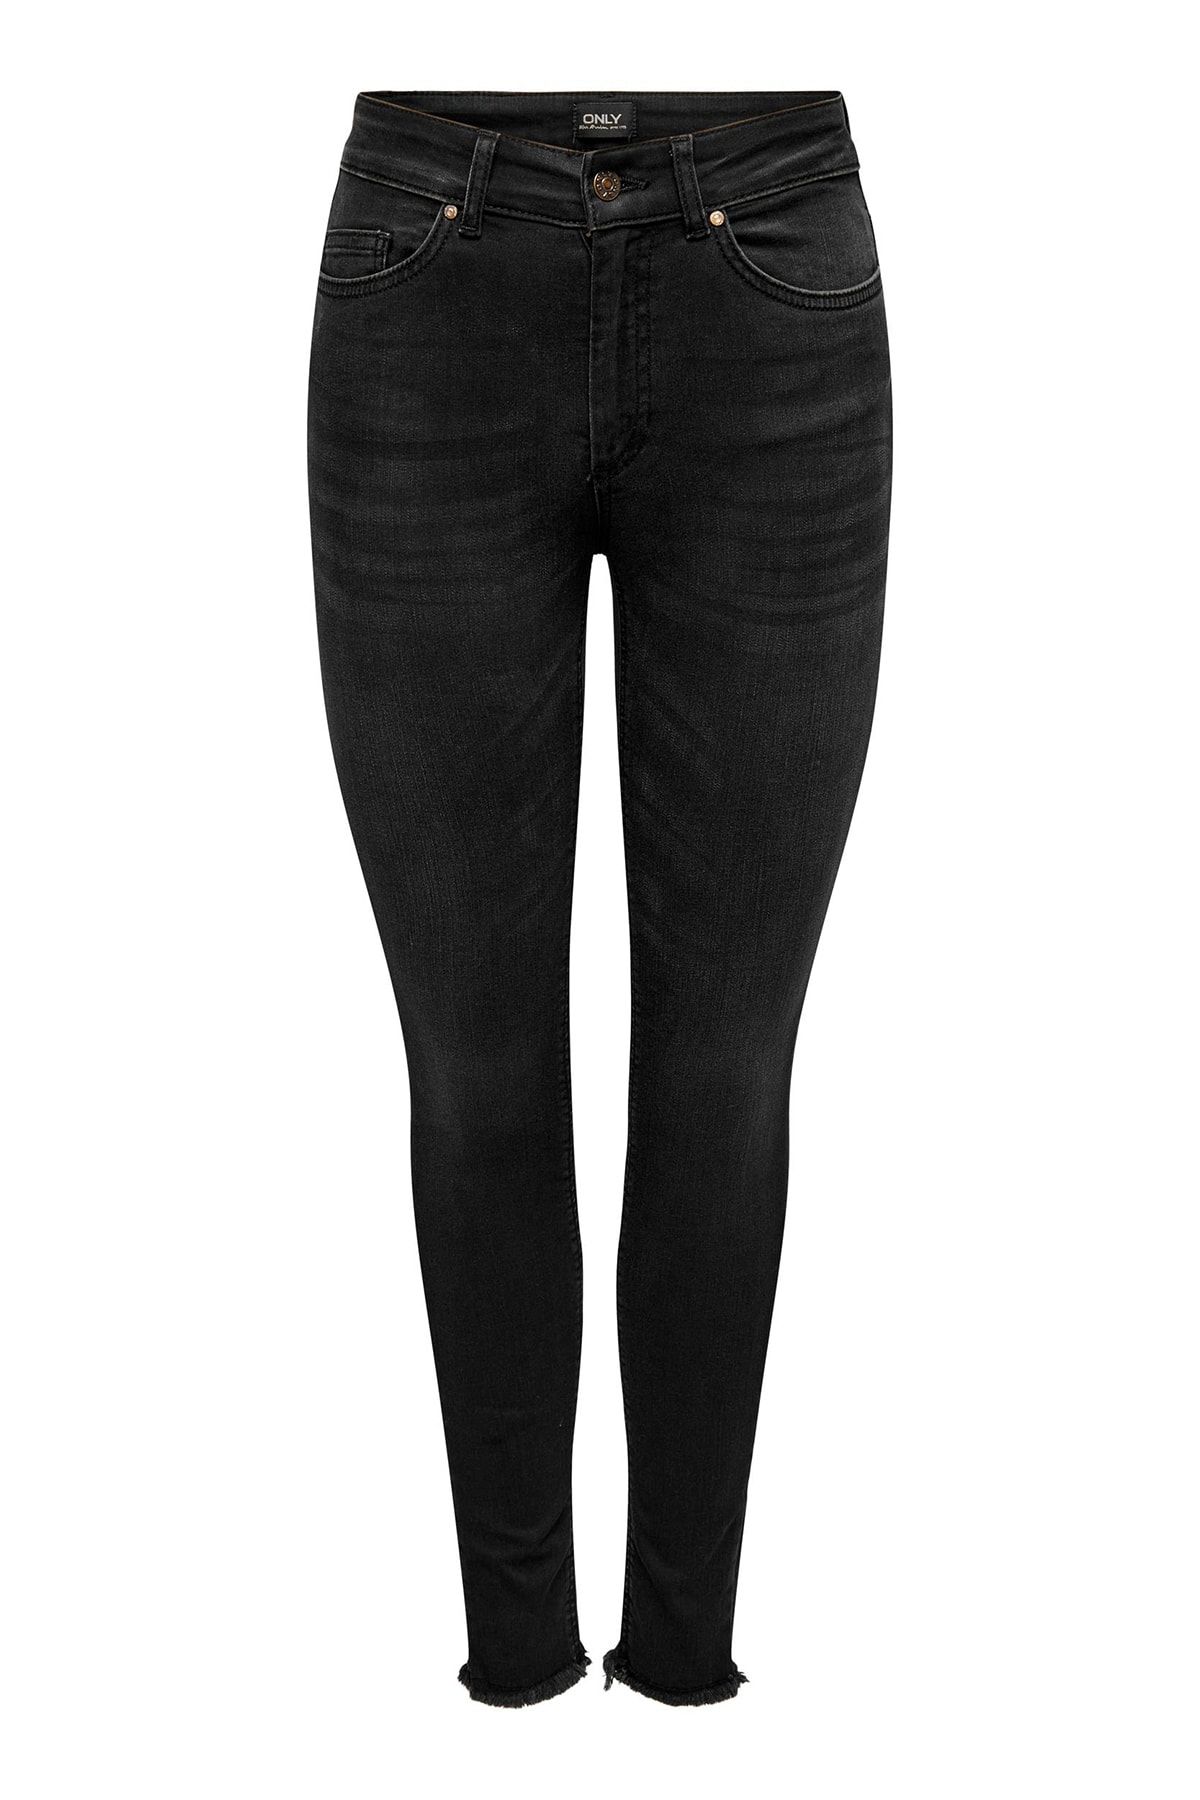 Only Pamuklu Normal Bel Skinny Fit Jeans Kot Pantolon 15287159